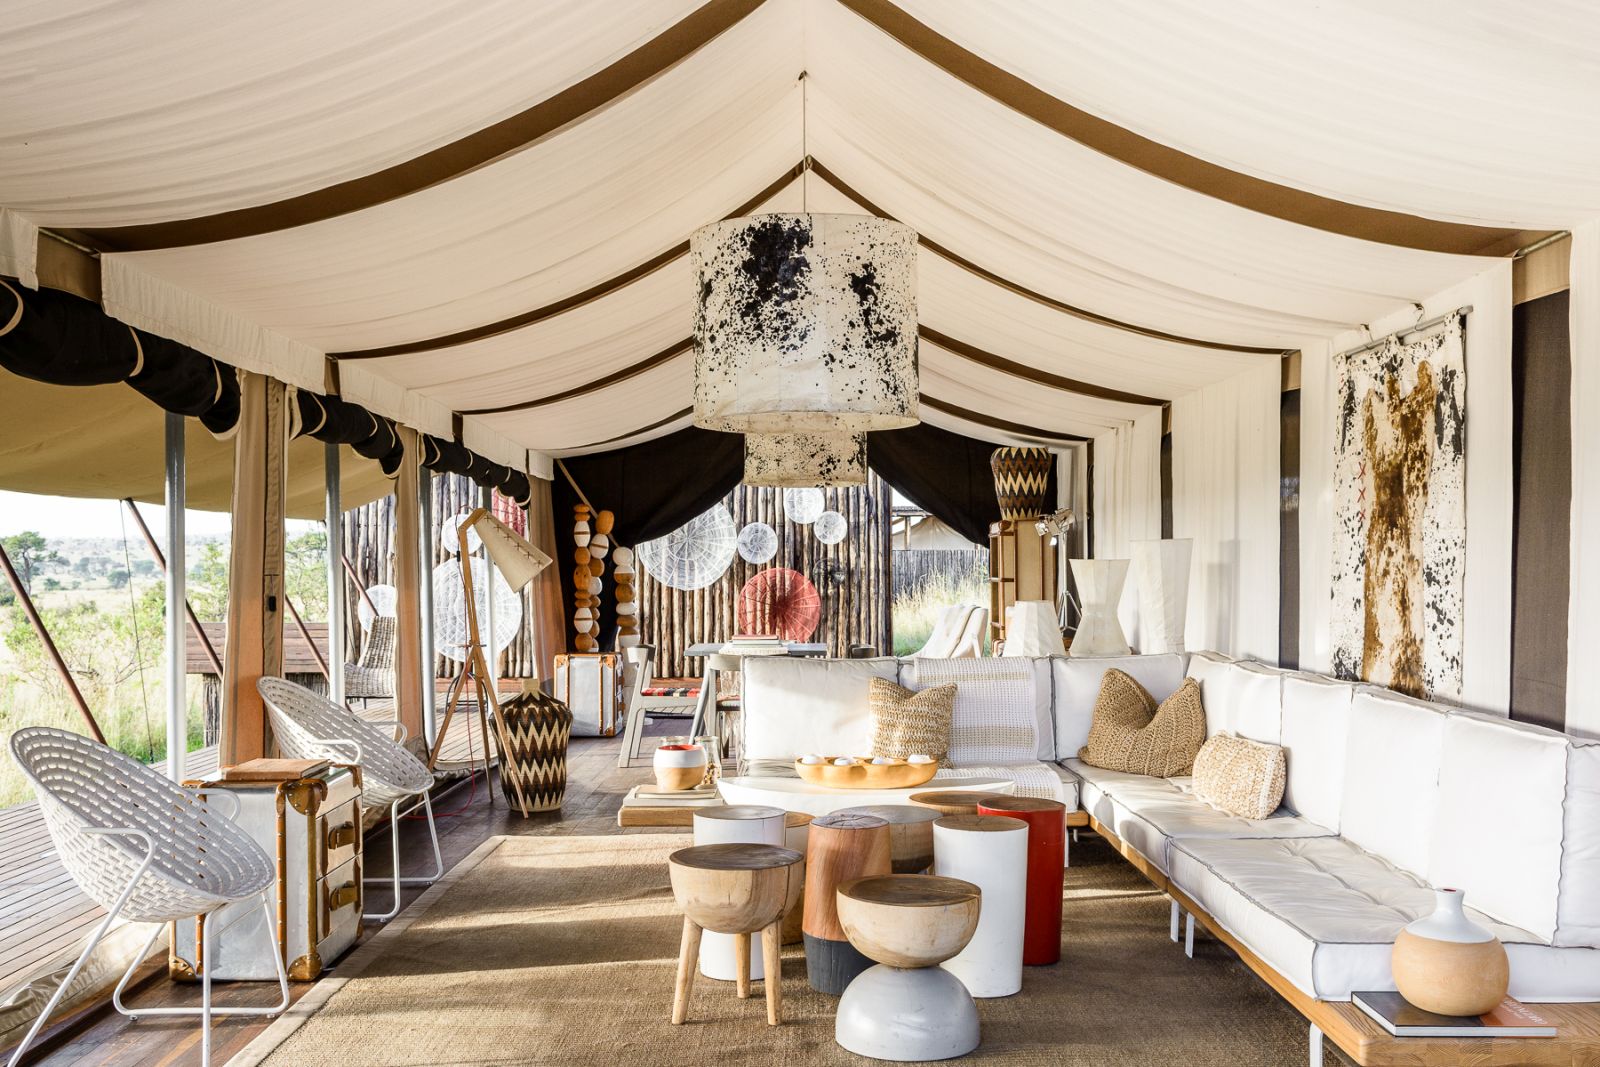 Mess tent interior at Singita Mara River Tented Camp in Tanzania 